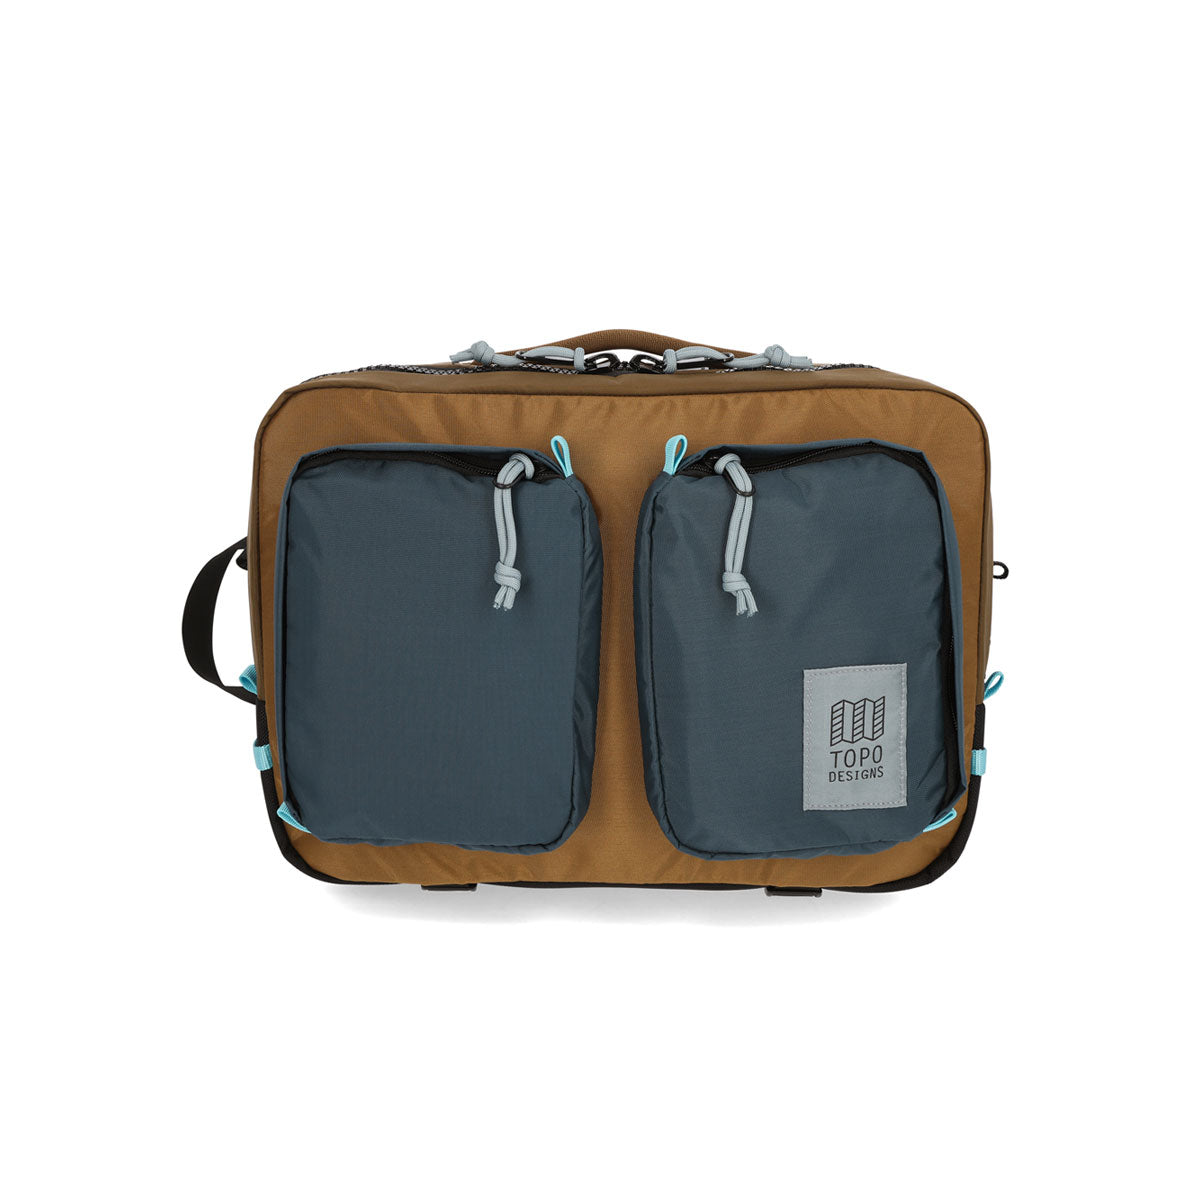 Topo Designs : Global Briefcase : Desert Palm/Pond Blue